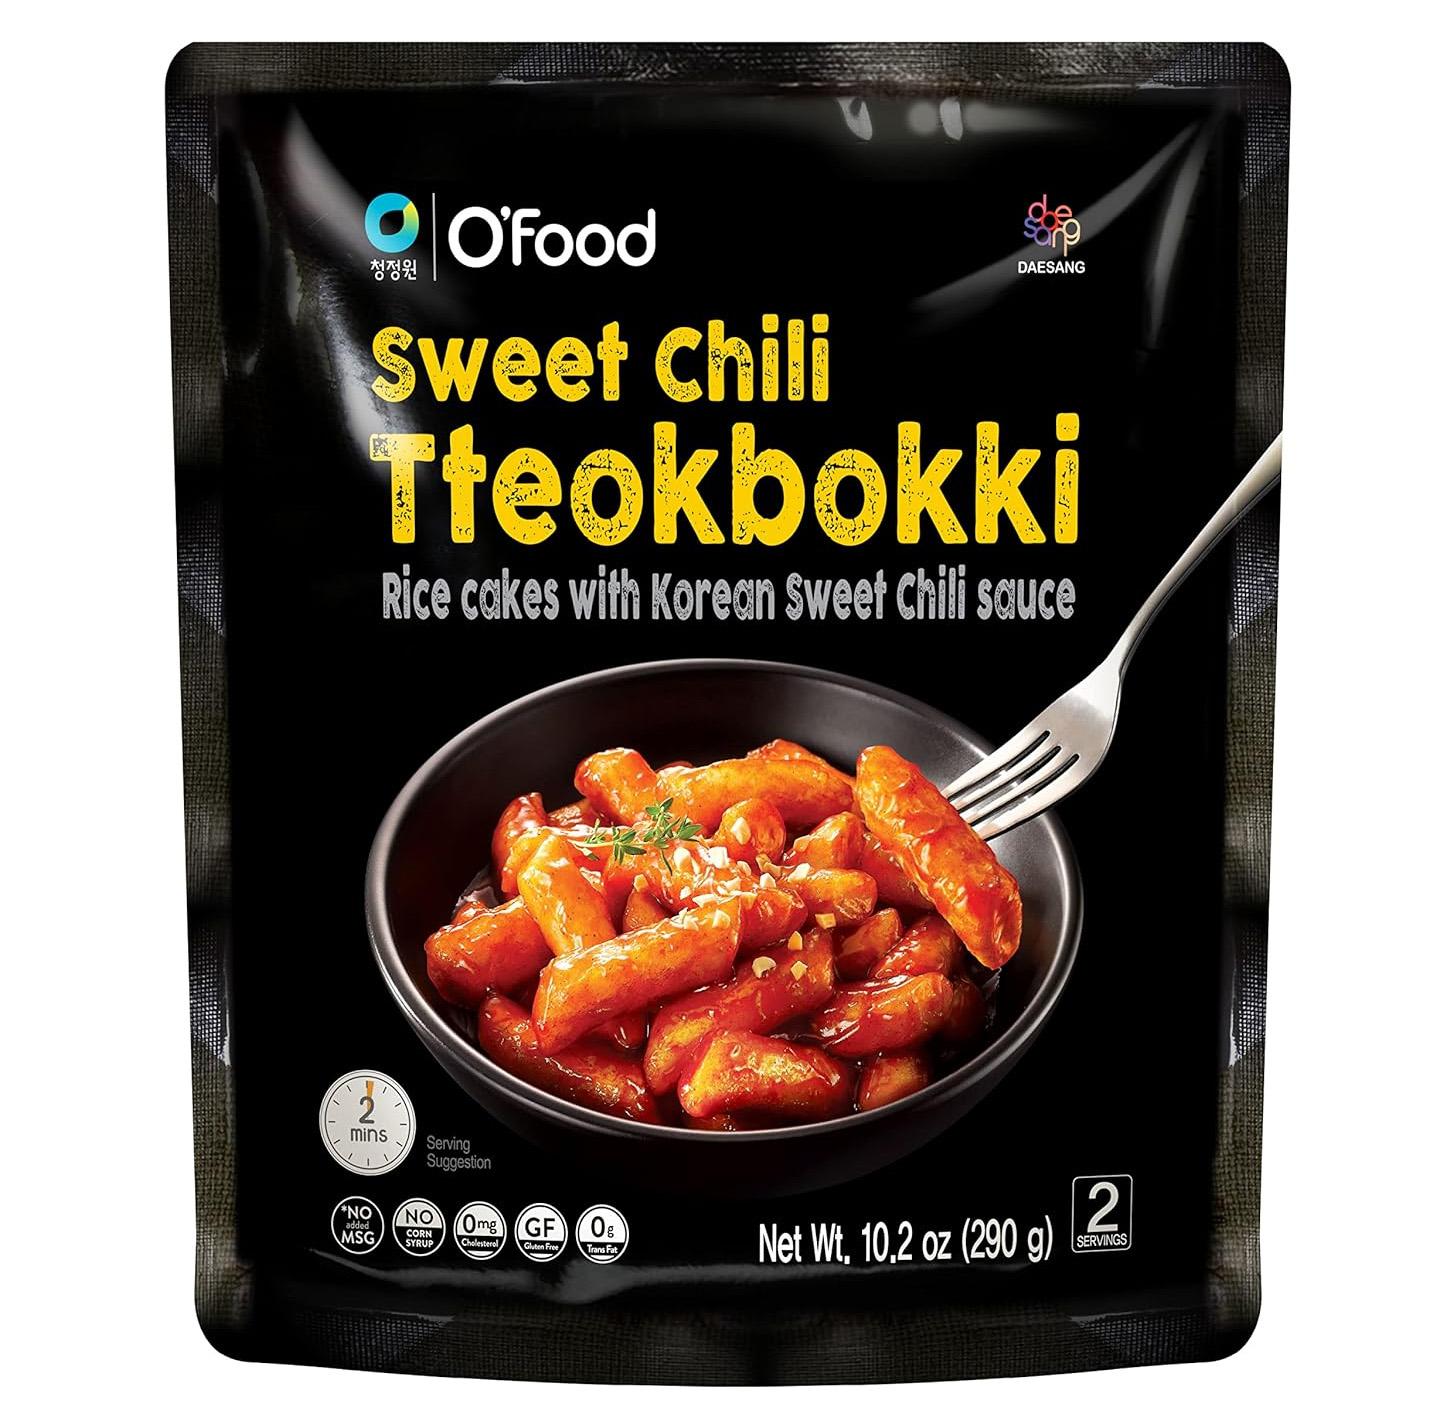 OFood Tteokbokki Gluten-Free Korean Rice Cakes for $3.79